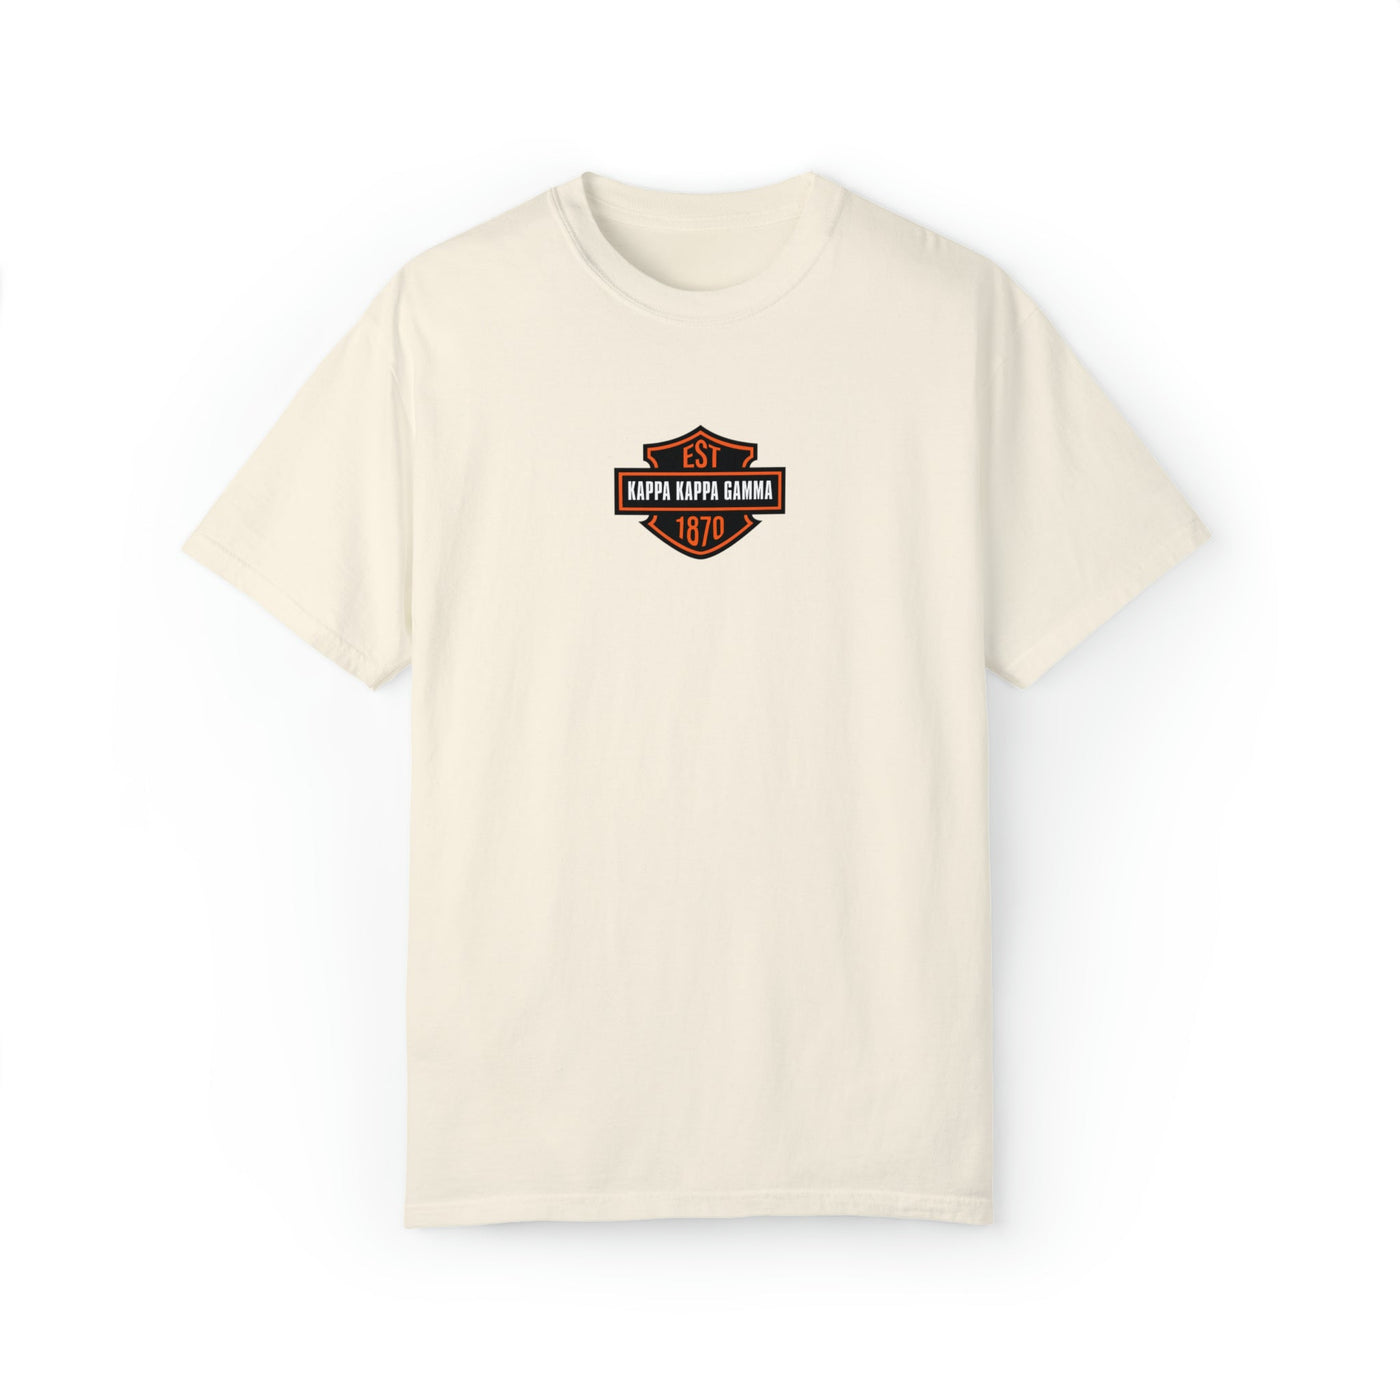 Kappa Kappa Gamma Motorcycle Inspired Sorority T-shirt